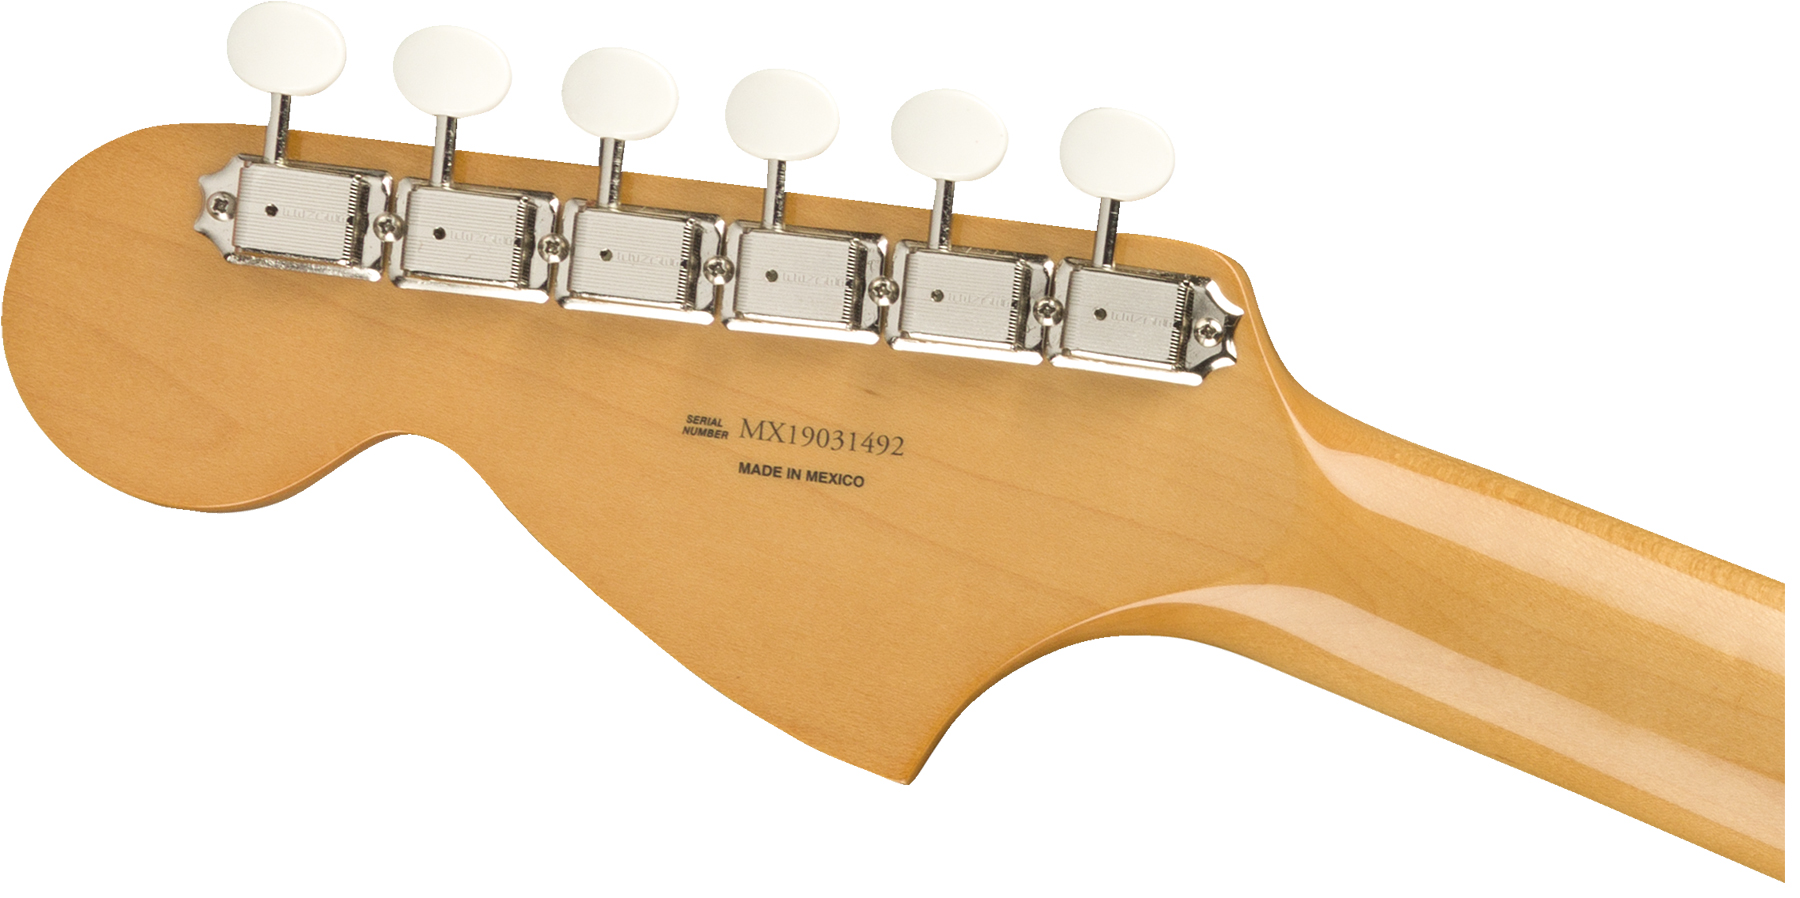 Fender Mustang 60s Vintera Vintage Mex Pf - Seafoam Green - Retro rock electric guitar - Variation 3